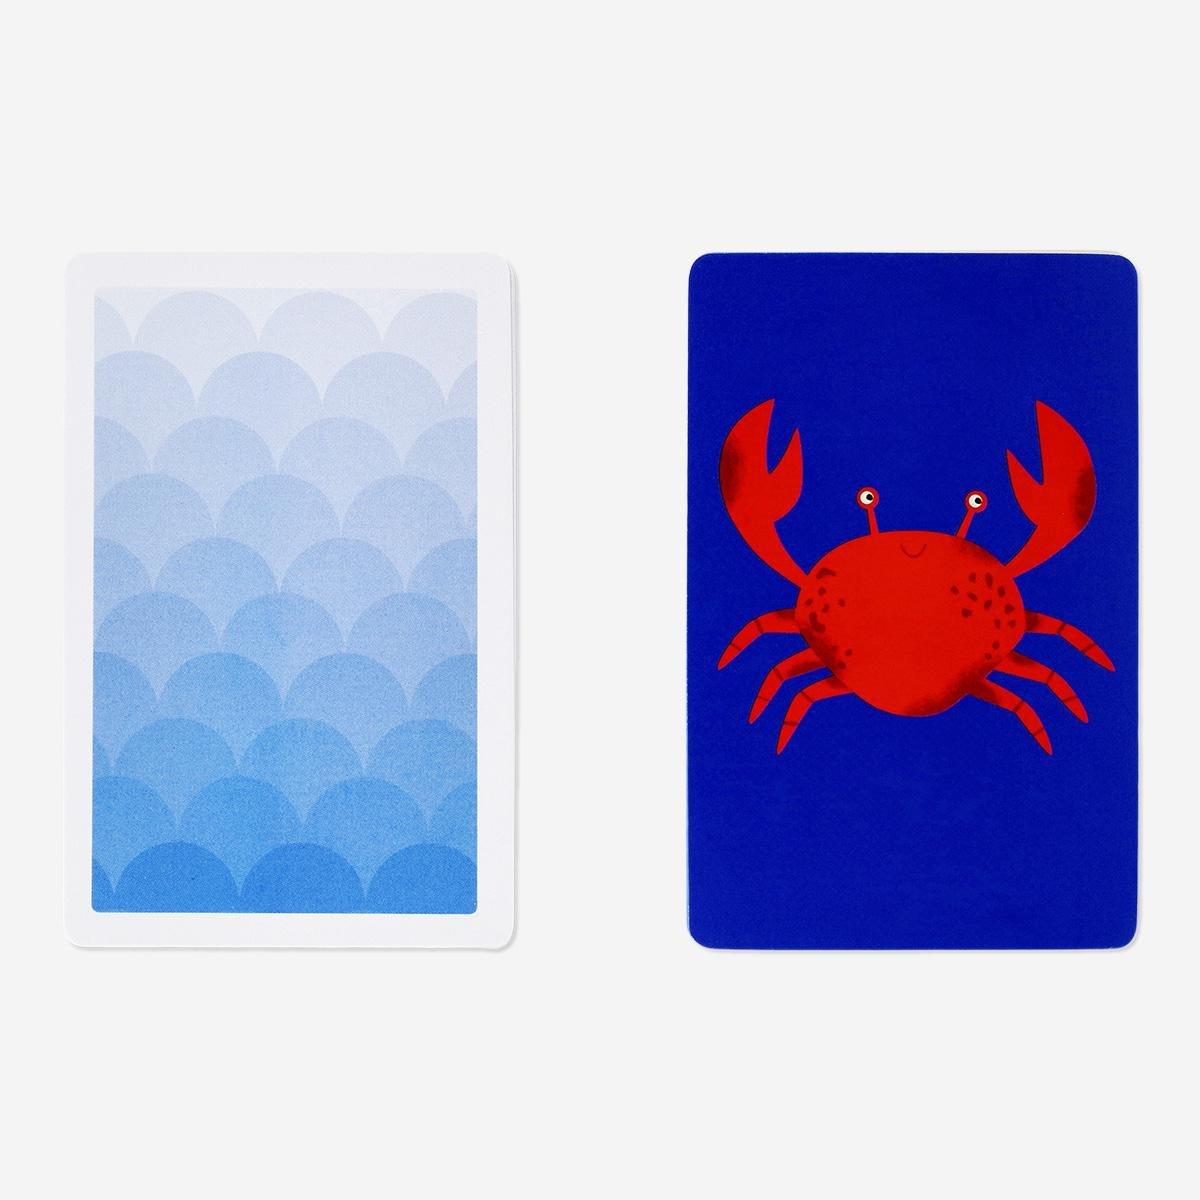 Multicolour avoid the crab card game